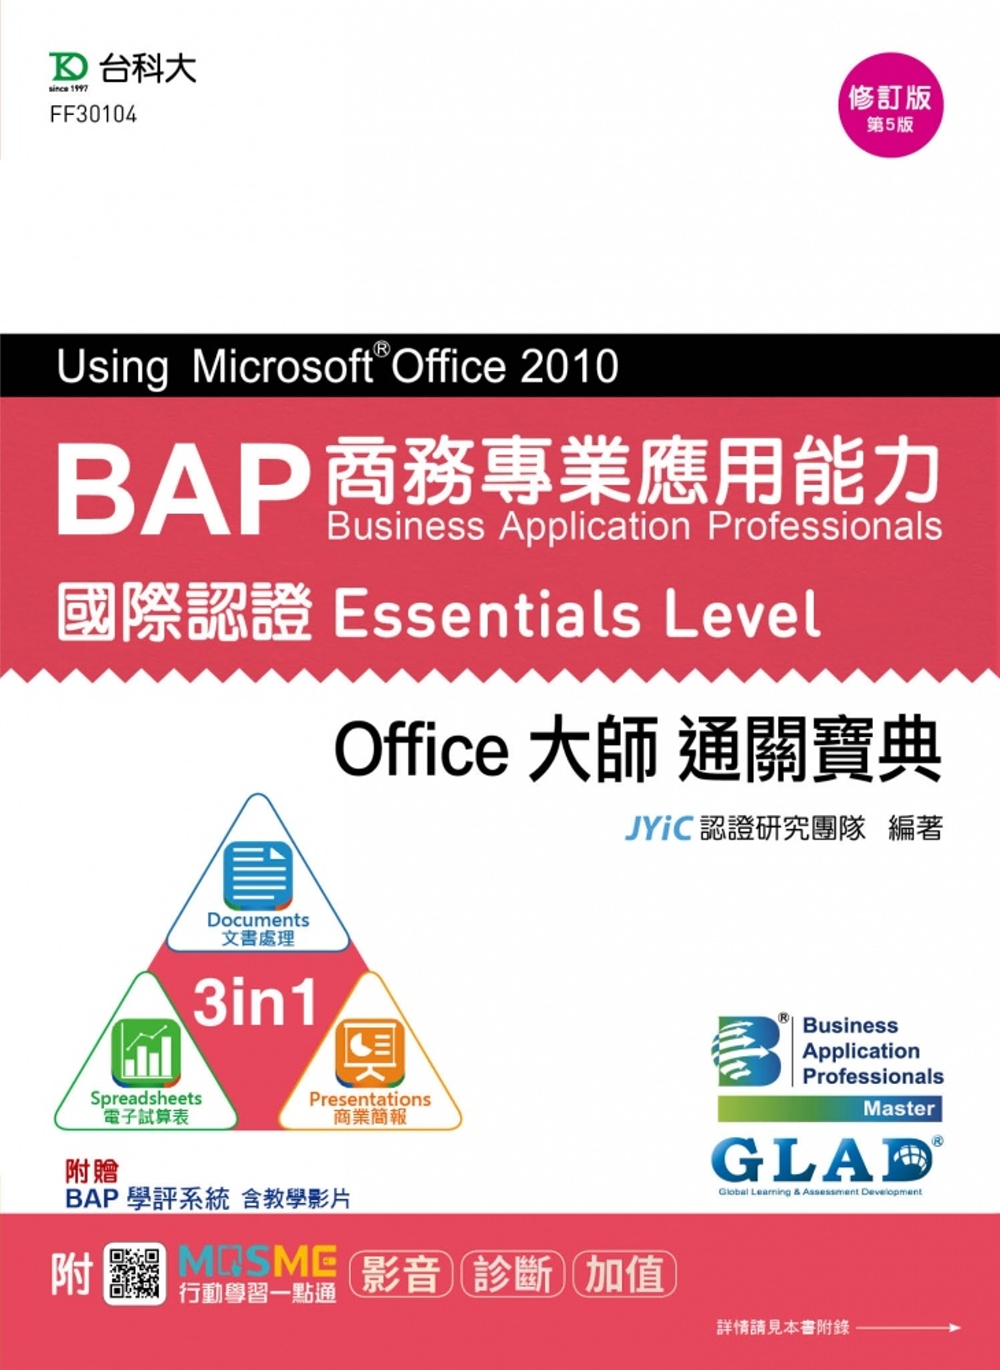 BAP Using Microsoft Office 2010商務專業應用能力國際認證Essentials Level Office大師通關寶典(三合一：Documents文書處理、Spreadsheets電子試算表、Presentations商業簡報) - 修訂版(第五版) - 附MOSME行動學習一點通：影音.診斷.加值